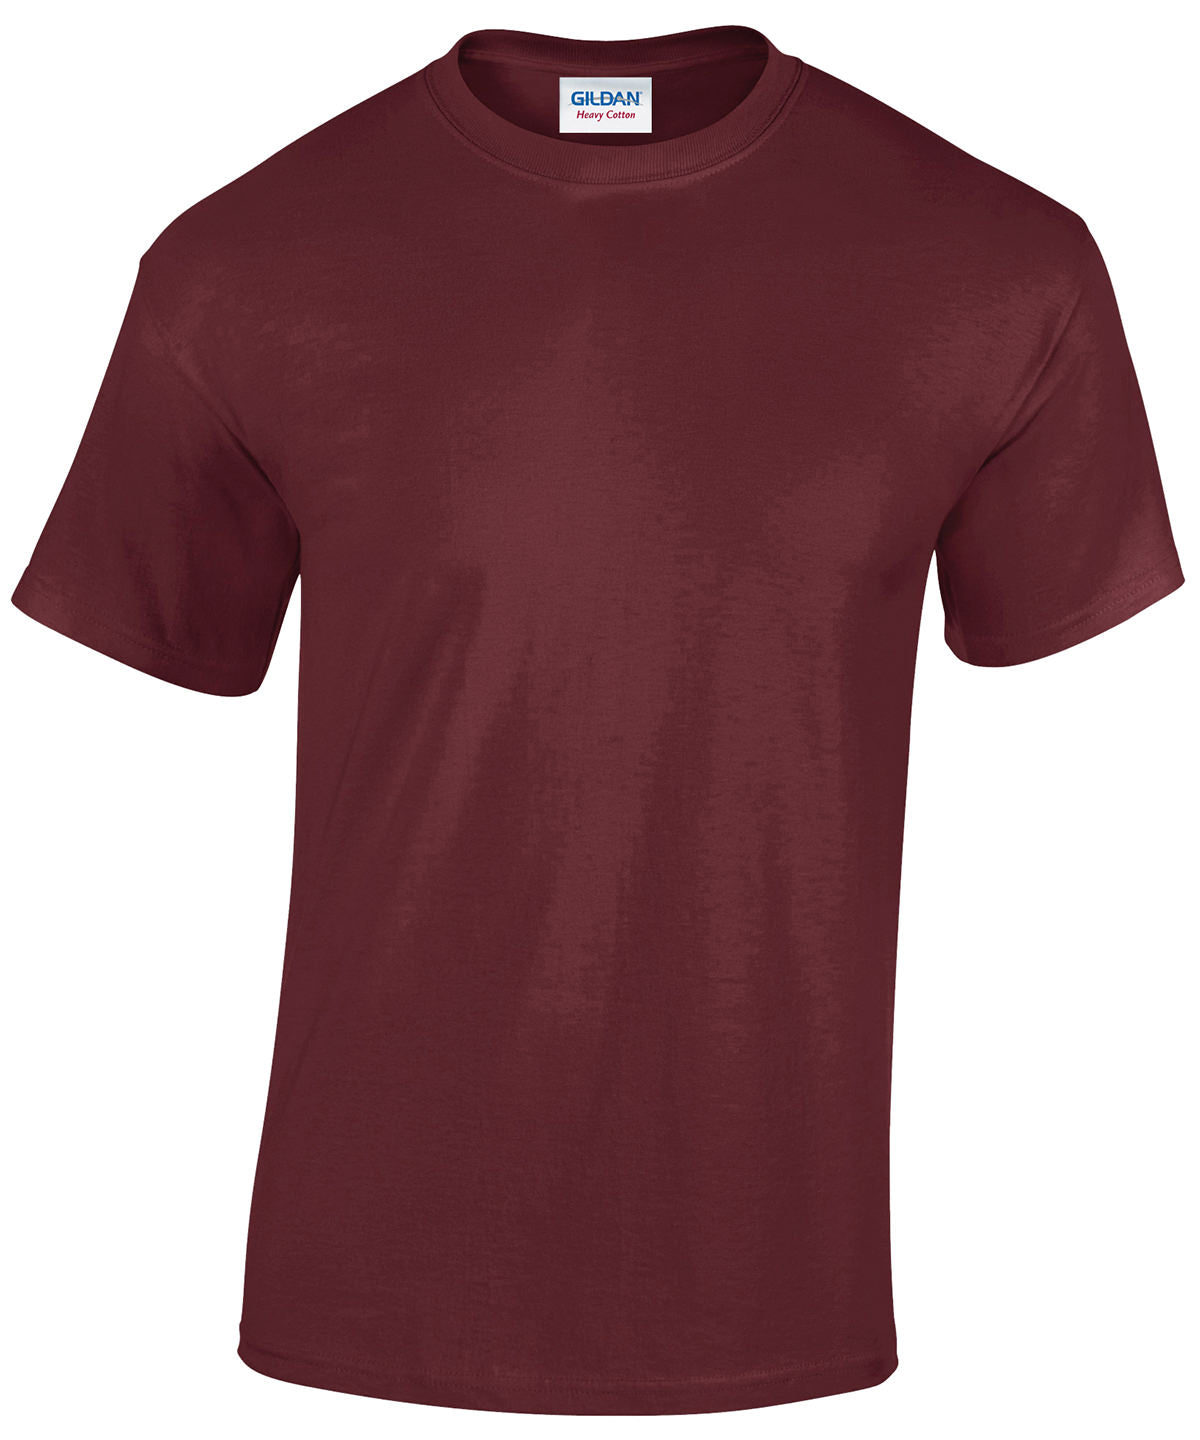 Gildan Heavy Cotton adult T-Shirt Maroon